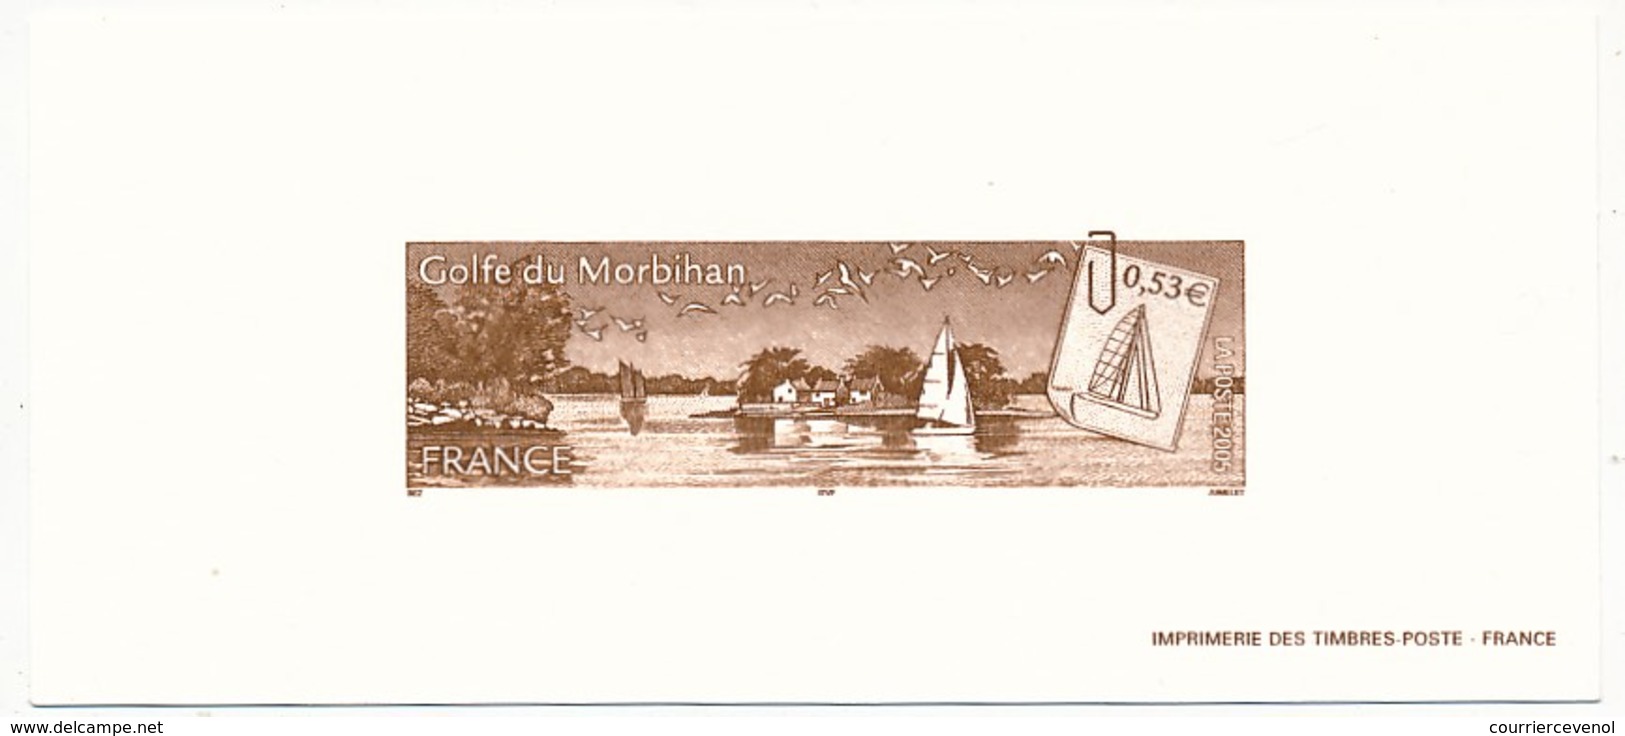 FRANCE - Gravure Du Timbre 0,53E Golfe Du Morbihan - Luxeproeven